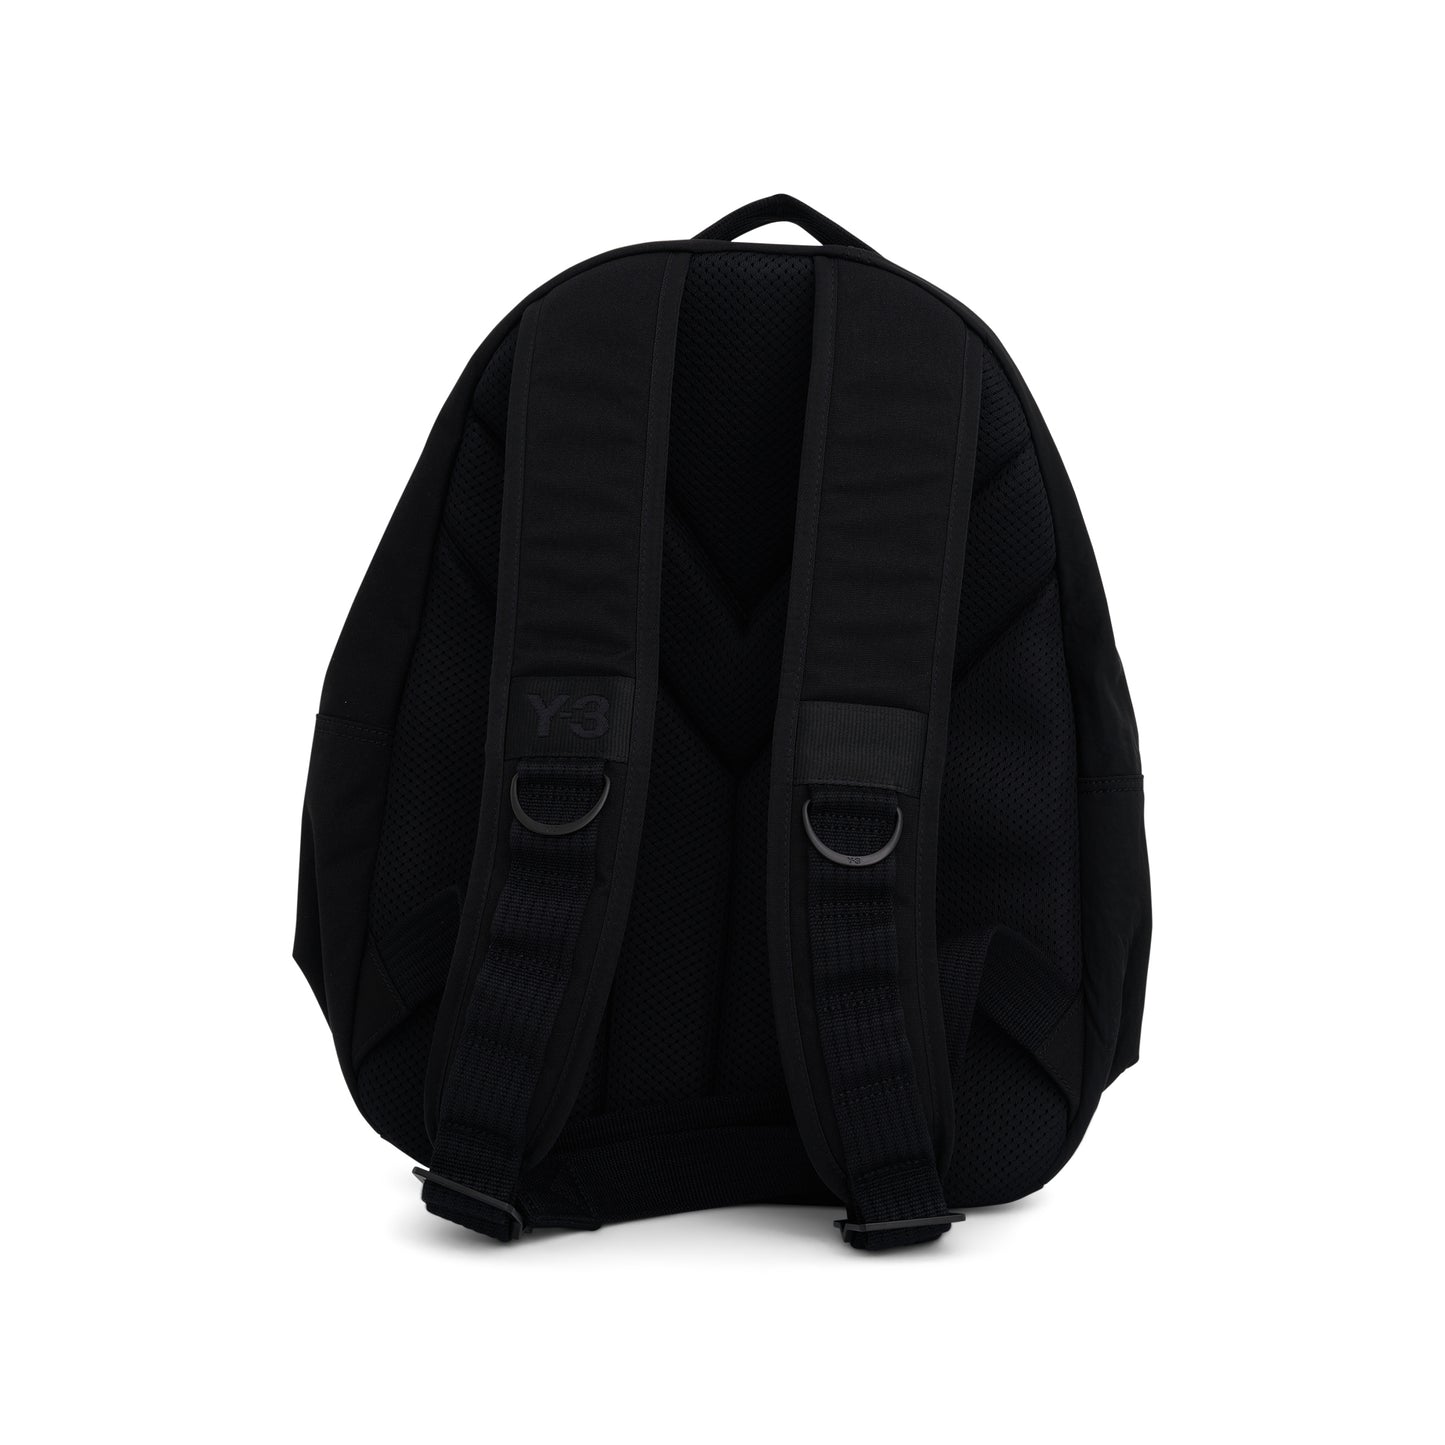 Y-3 Classic Backpack in Black